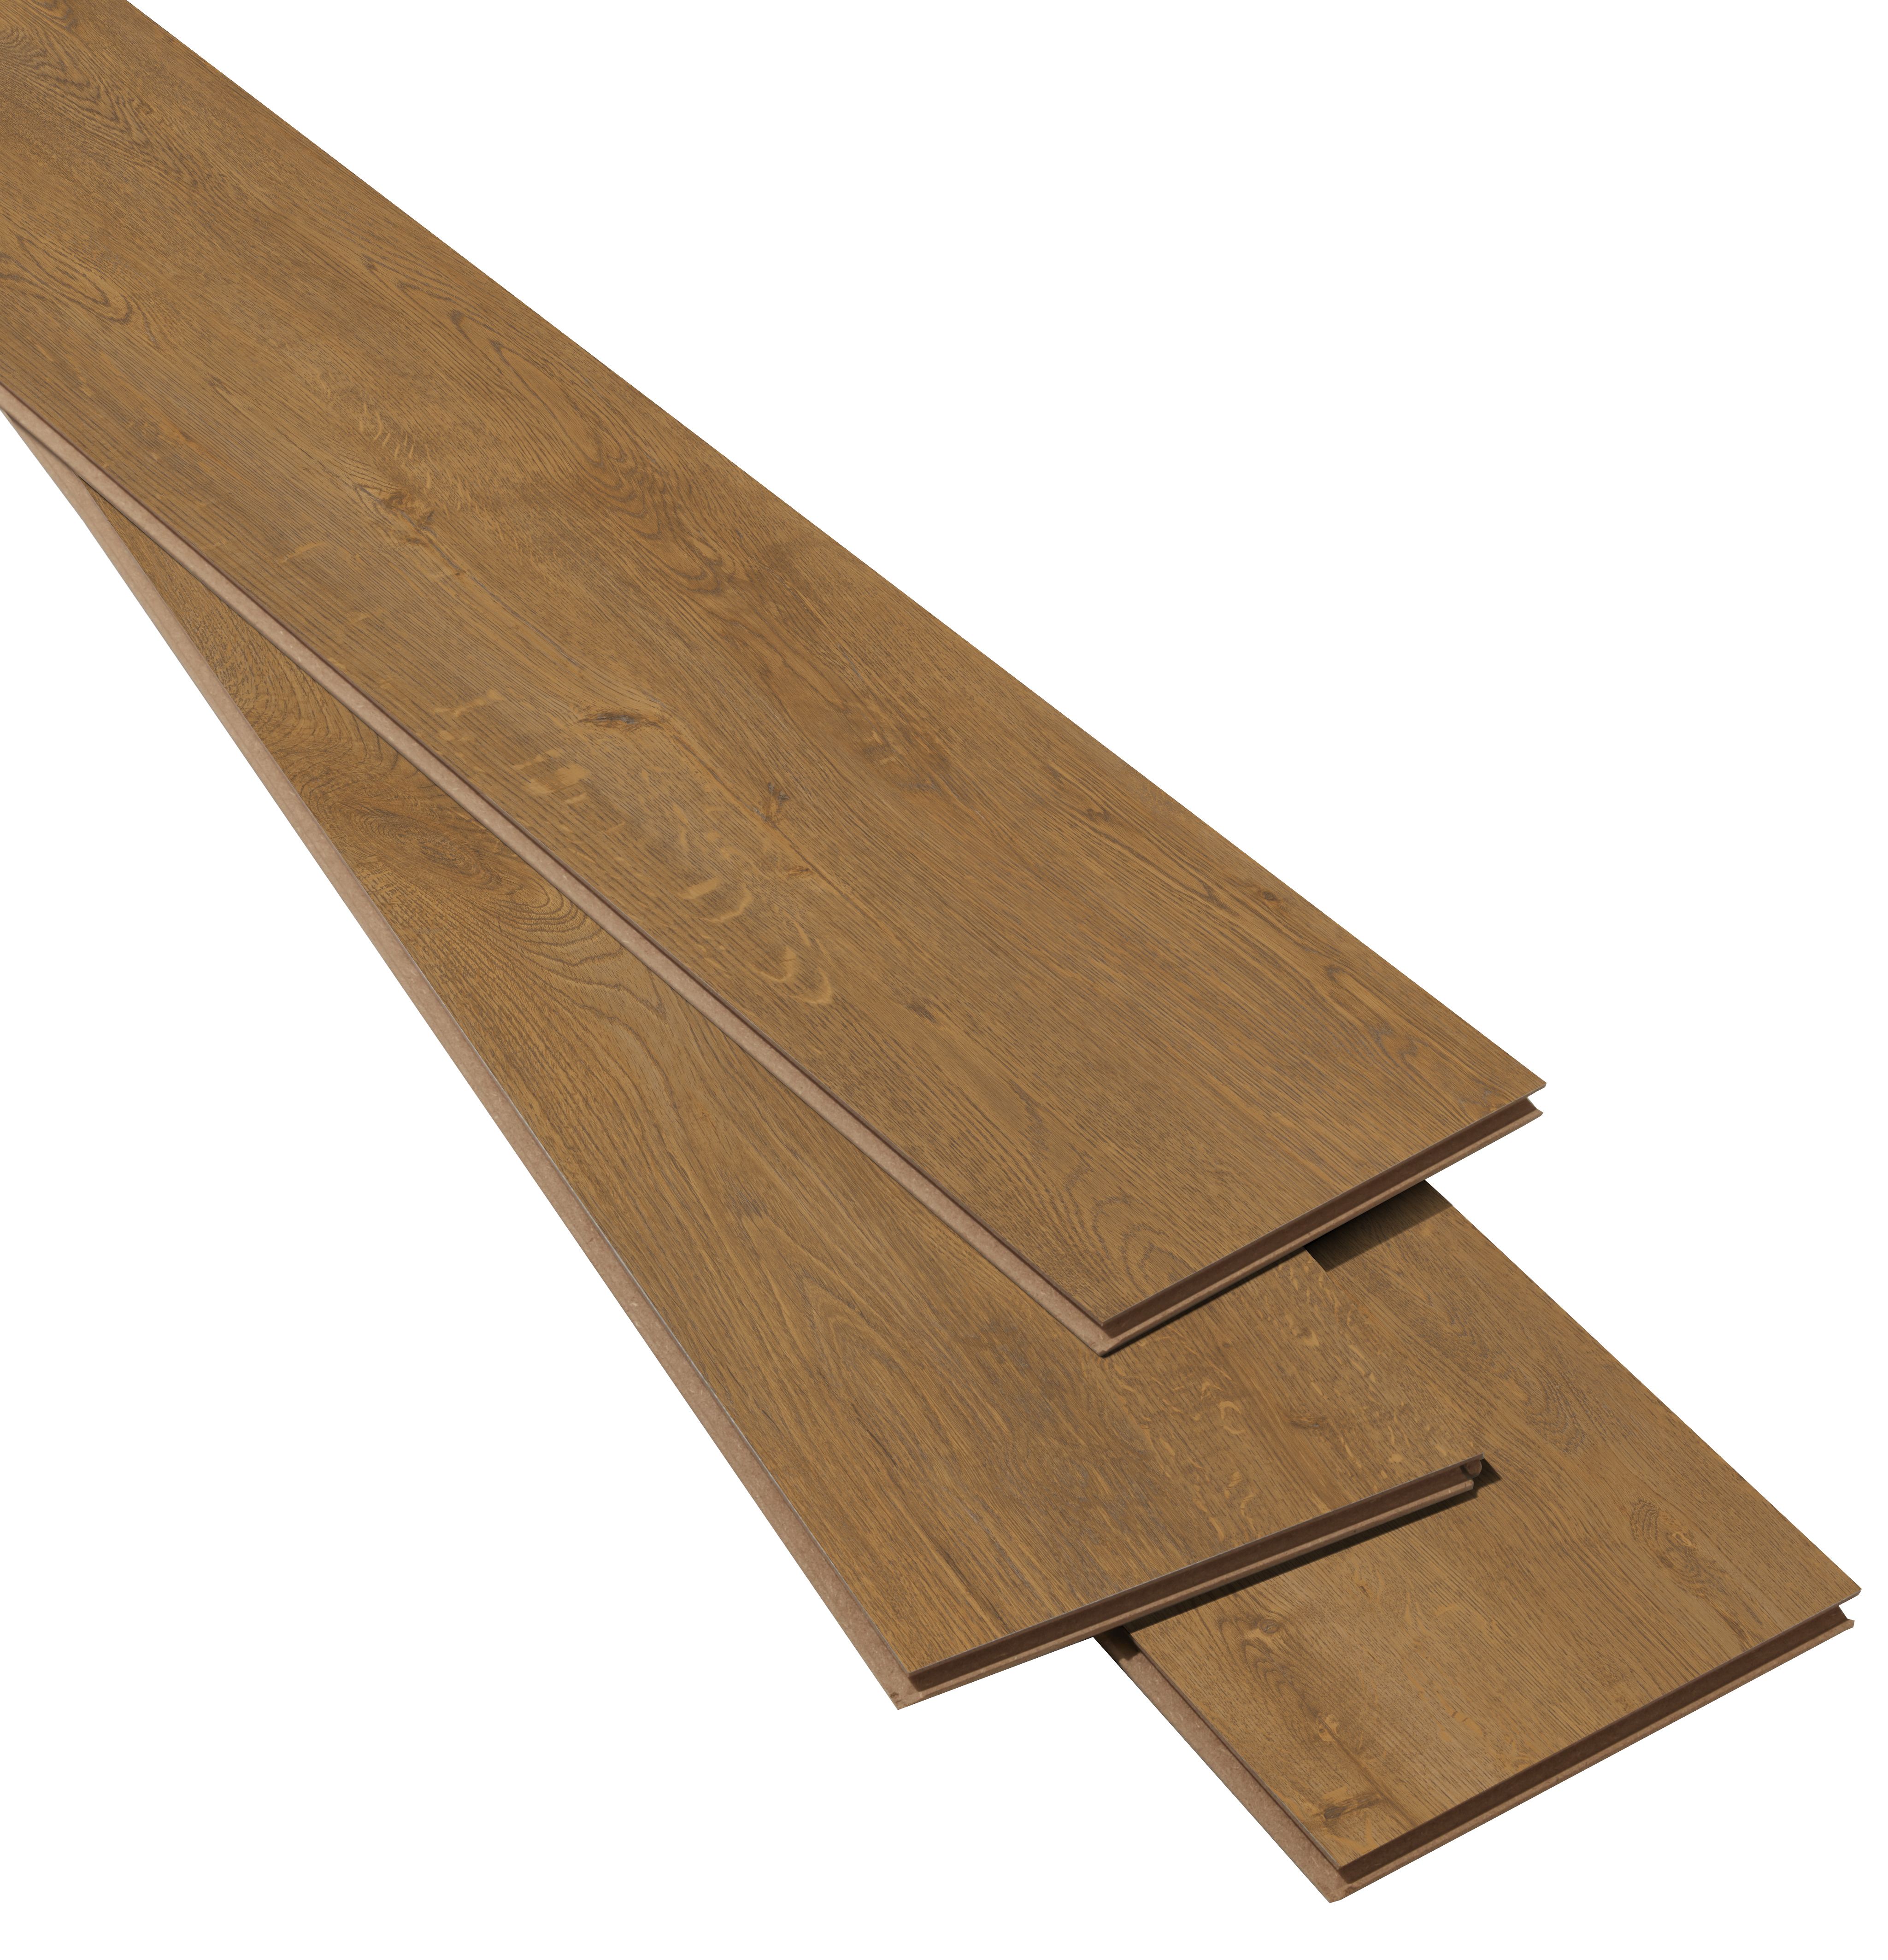 GoodHome Skara Wood design Wood effect Laminate Flooring, 2.54m²